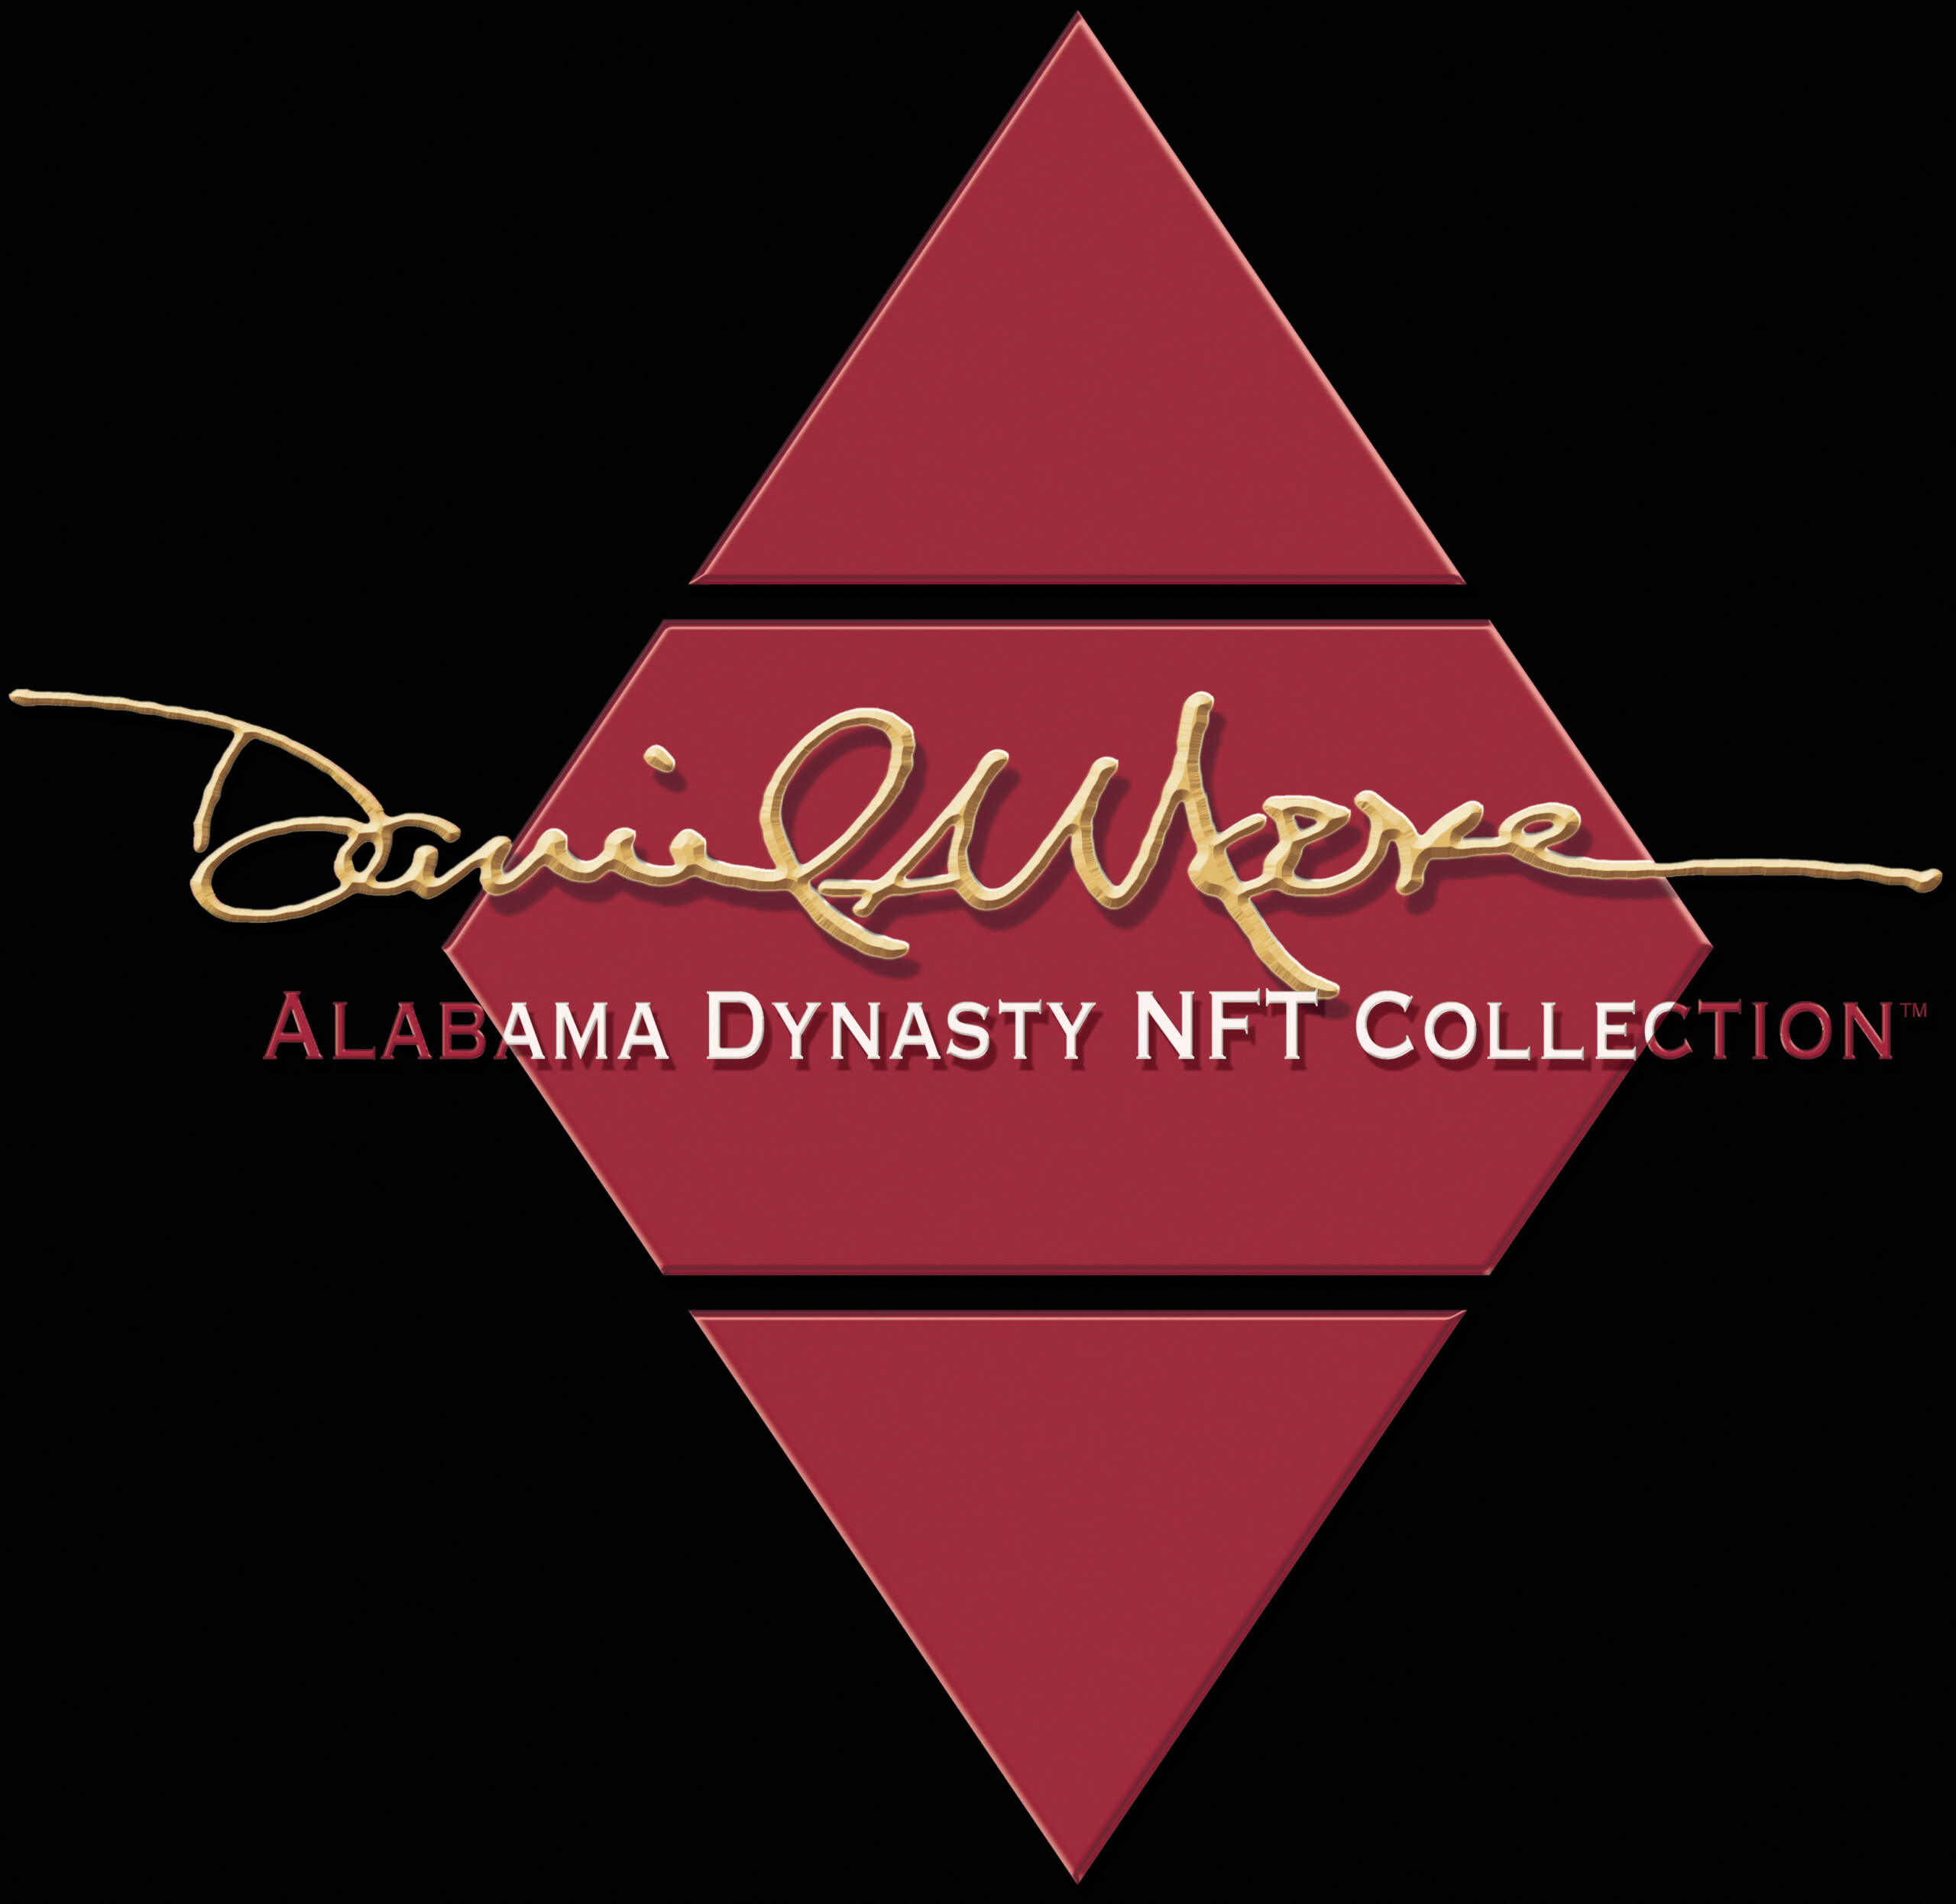 Alabama dynasty NFT Collection